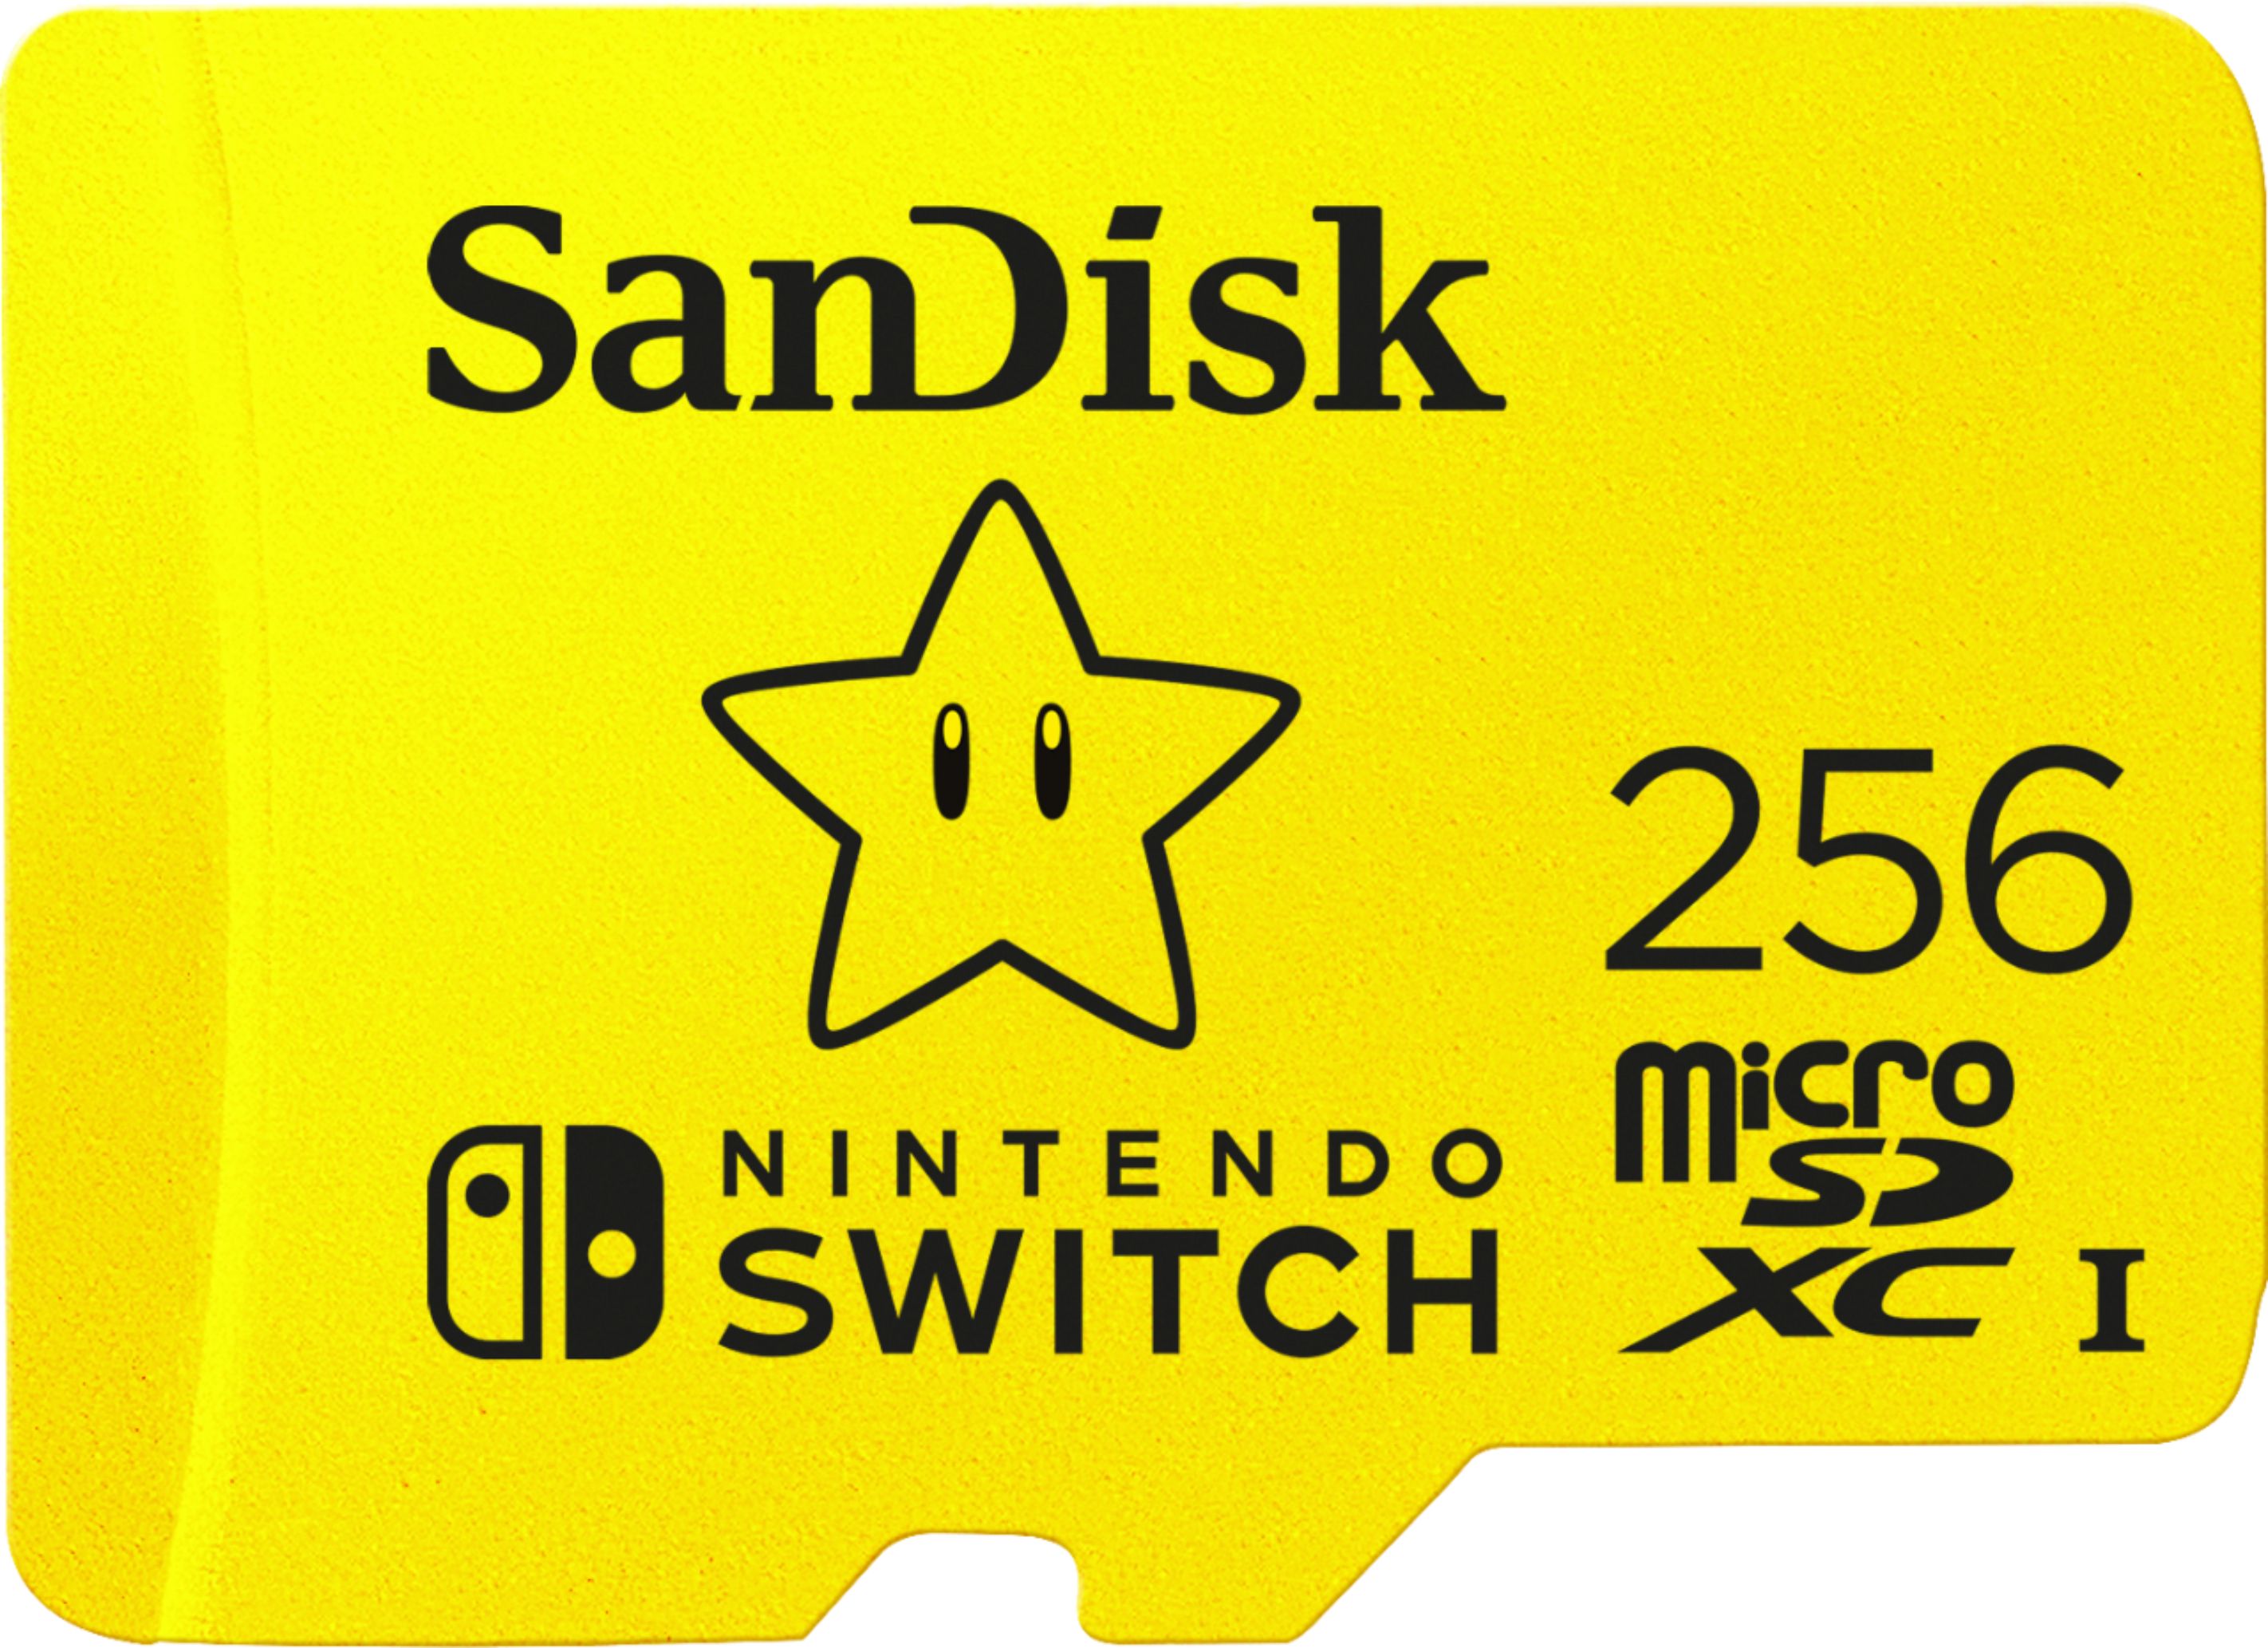 SanDisk - 256GB microSDXC Memory Card for Nintendo Switch